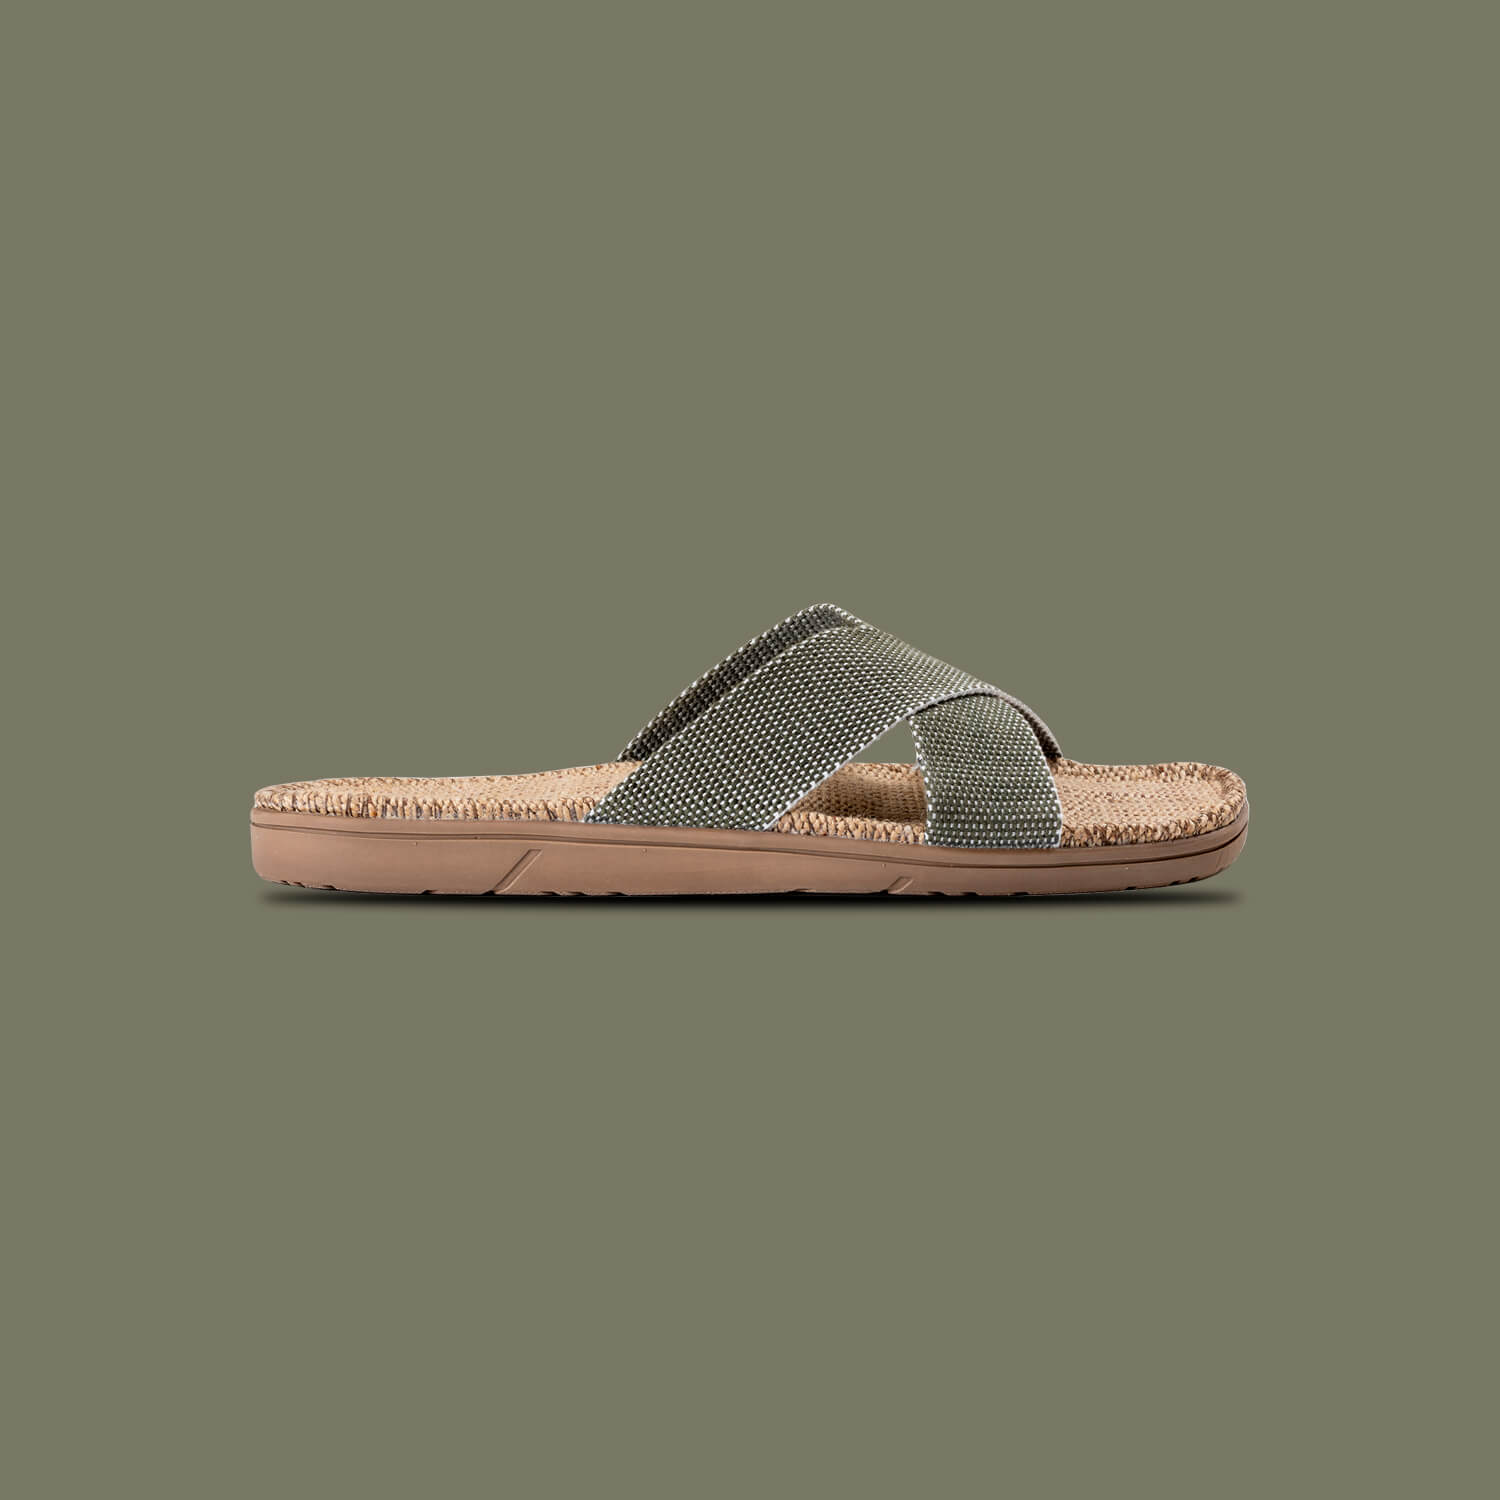 Danish Sandals - Unisex | Dusty Olive | Light Breathable Washable | by Shangies - Lifestory - Shangies by Stilov